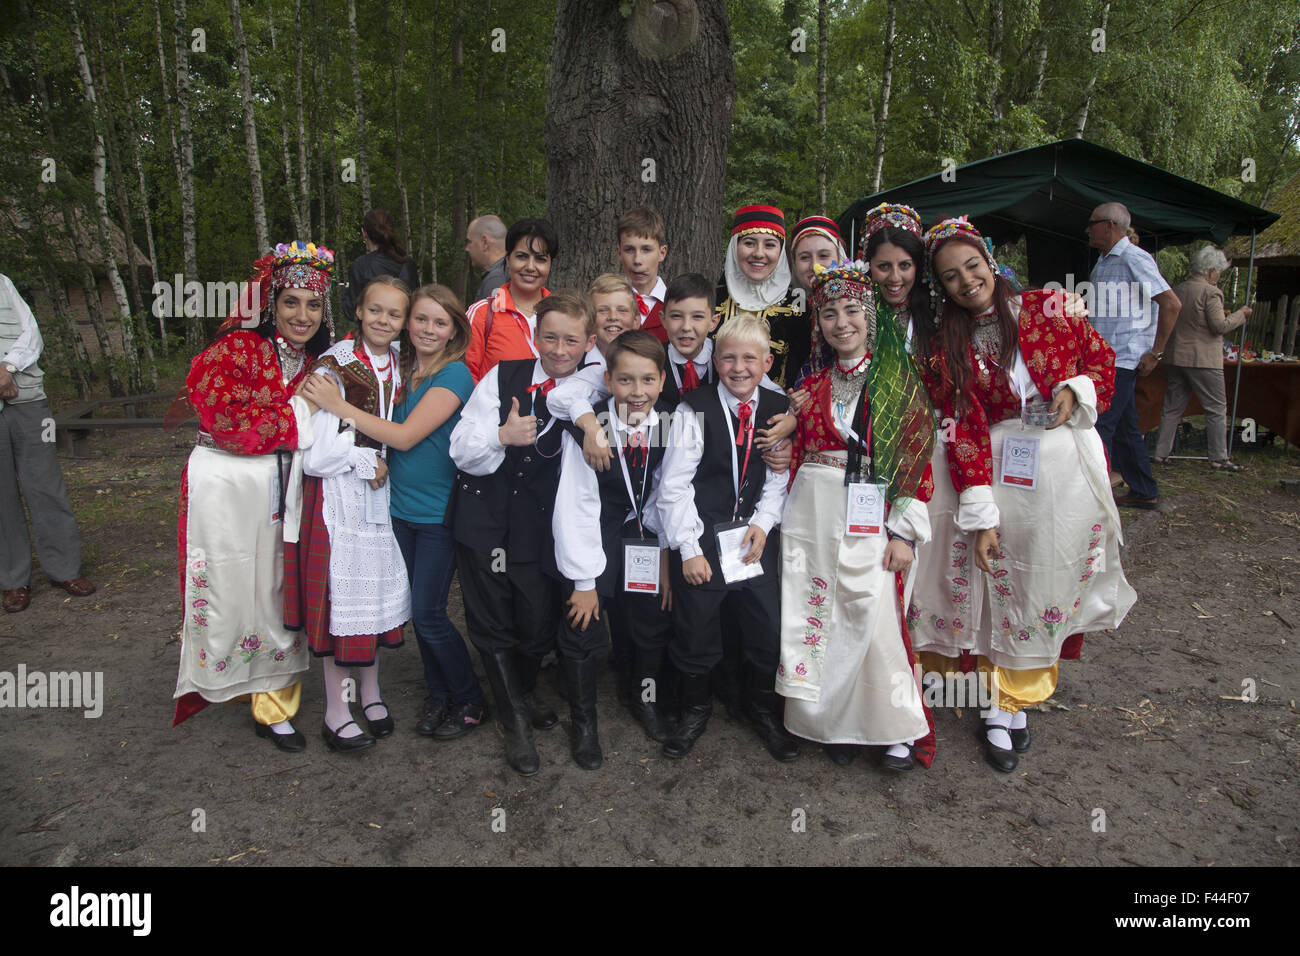 Danzatori provenienti da vari paesi in un international folk arts festival pongono insieme nei pressi di Zielona Gora, Polonia. Foto Stock